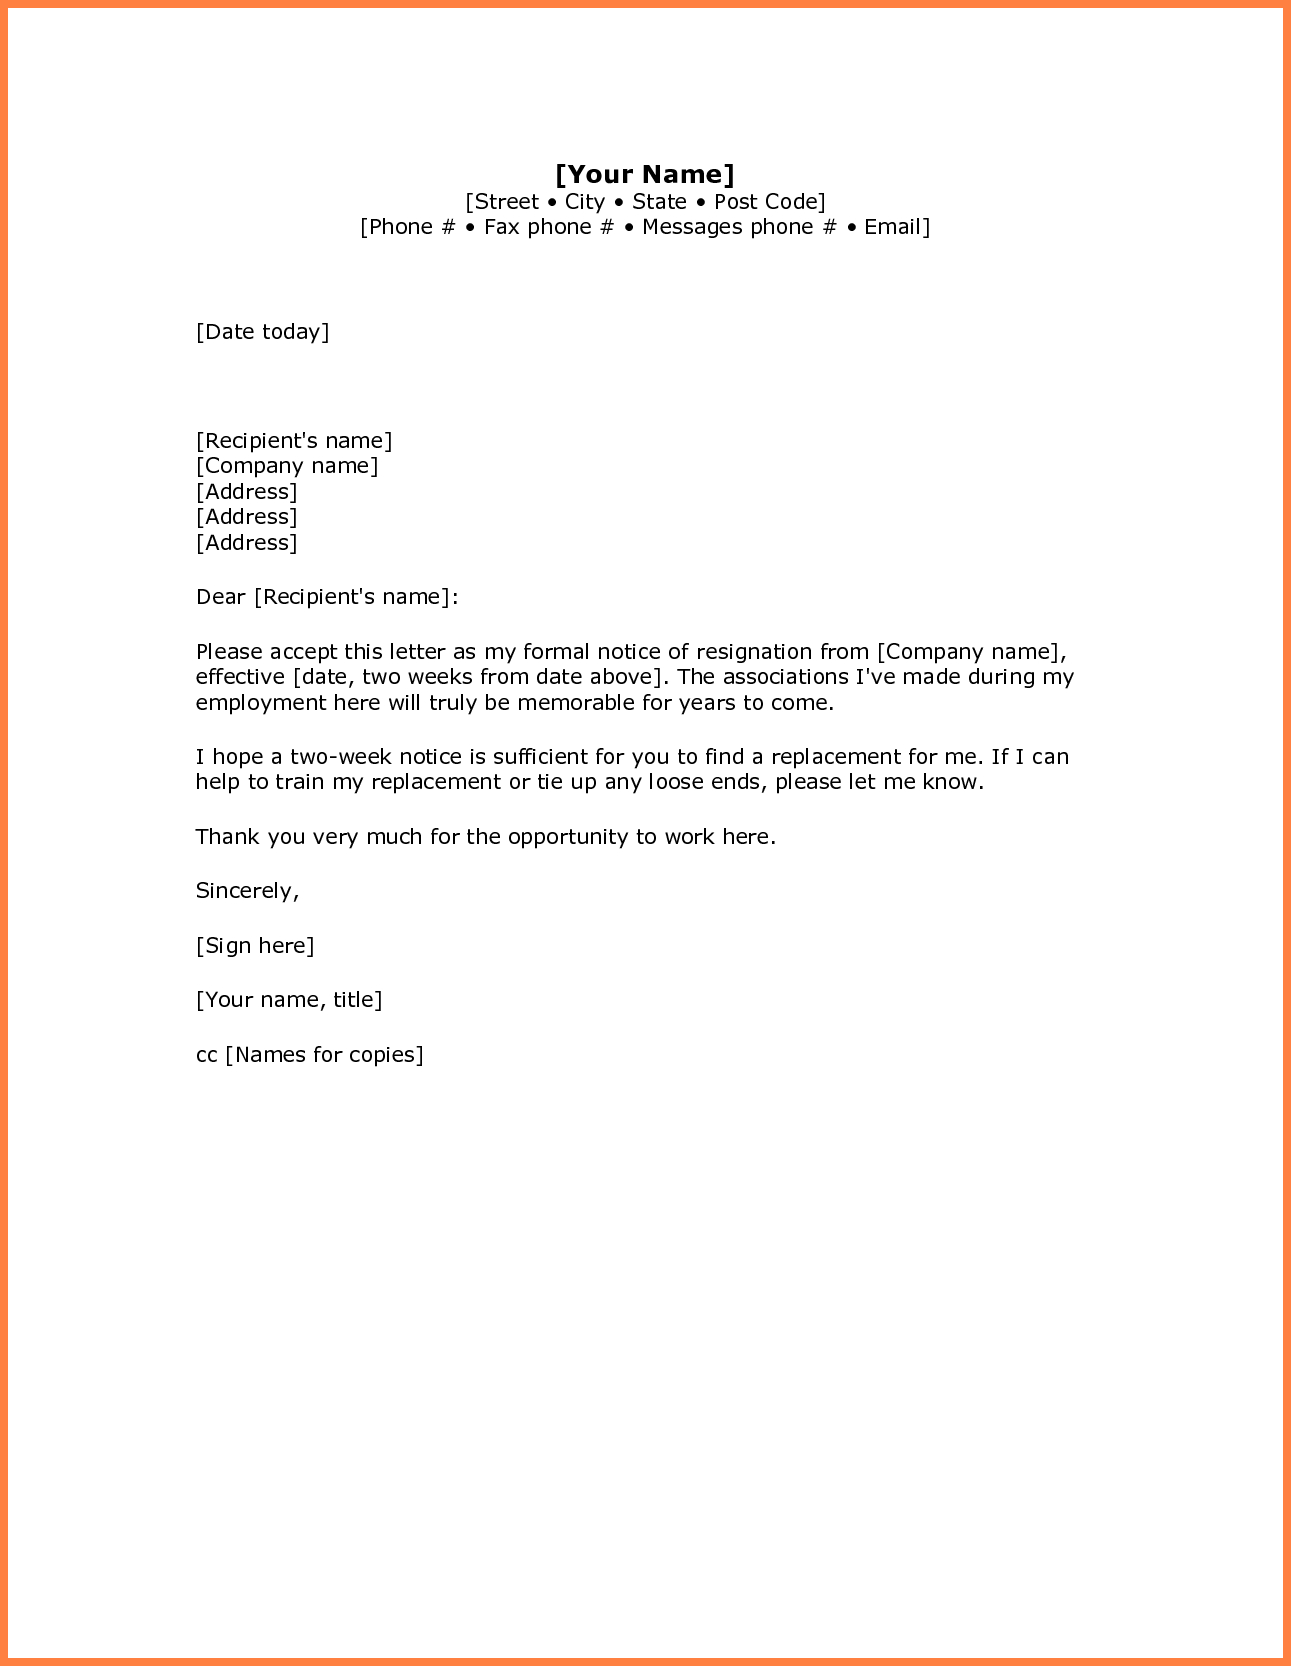 Letter format Template - 5 Simple Resignation Letter Sample 1 Week Notice